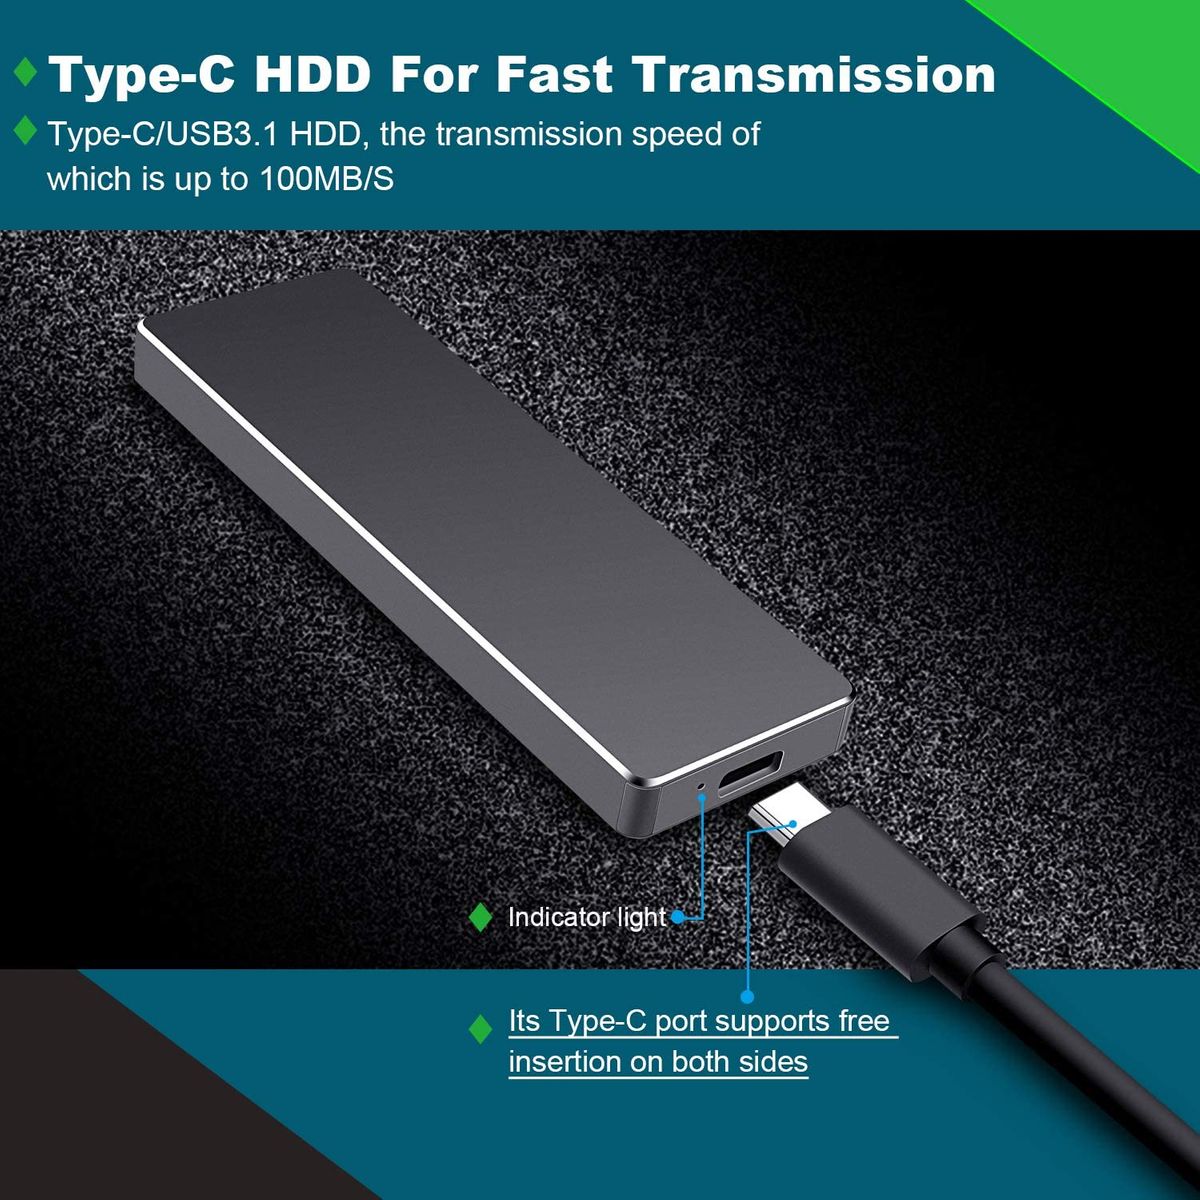 Proking 1TB External Hard Drive Portable Ultra Slim Type C USB 3.1 Hard Drive for PC Mac Windows Apple Xbox One, blue